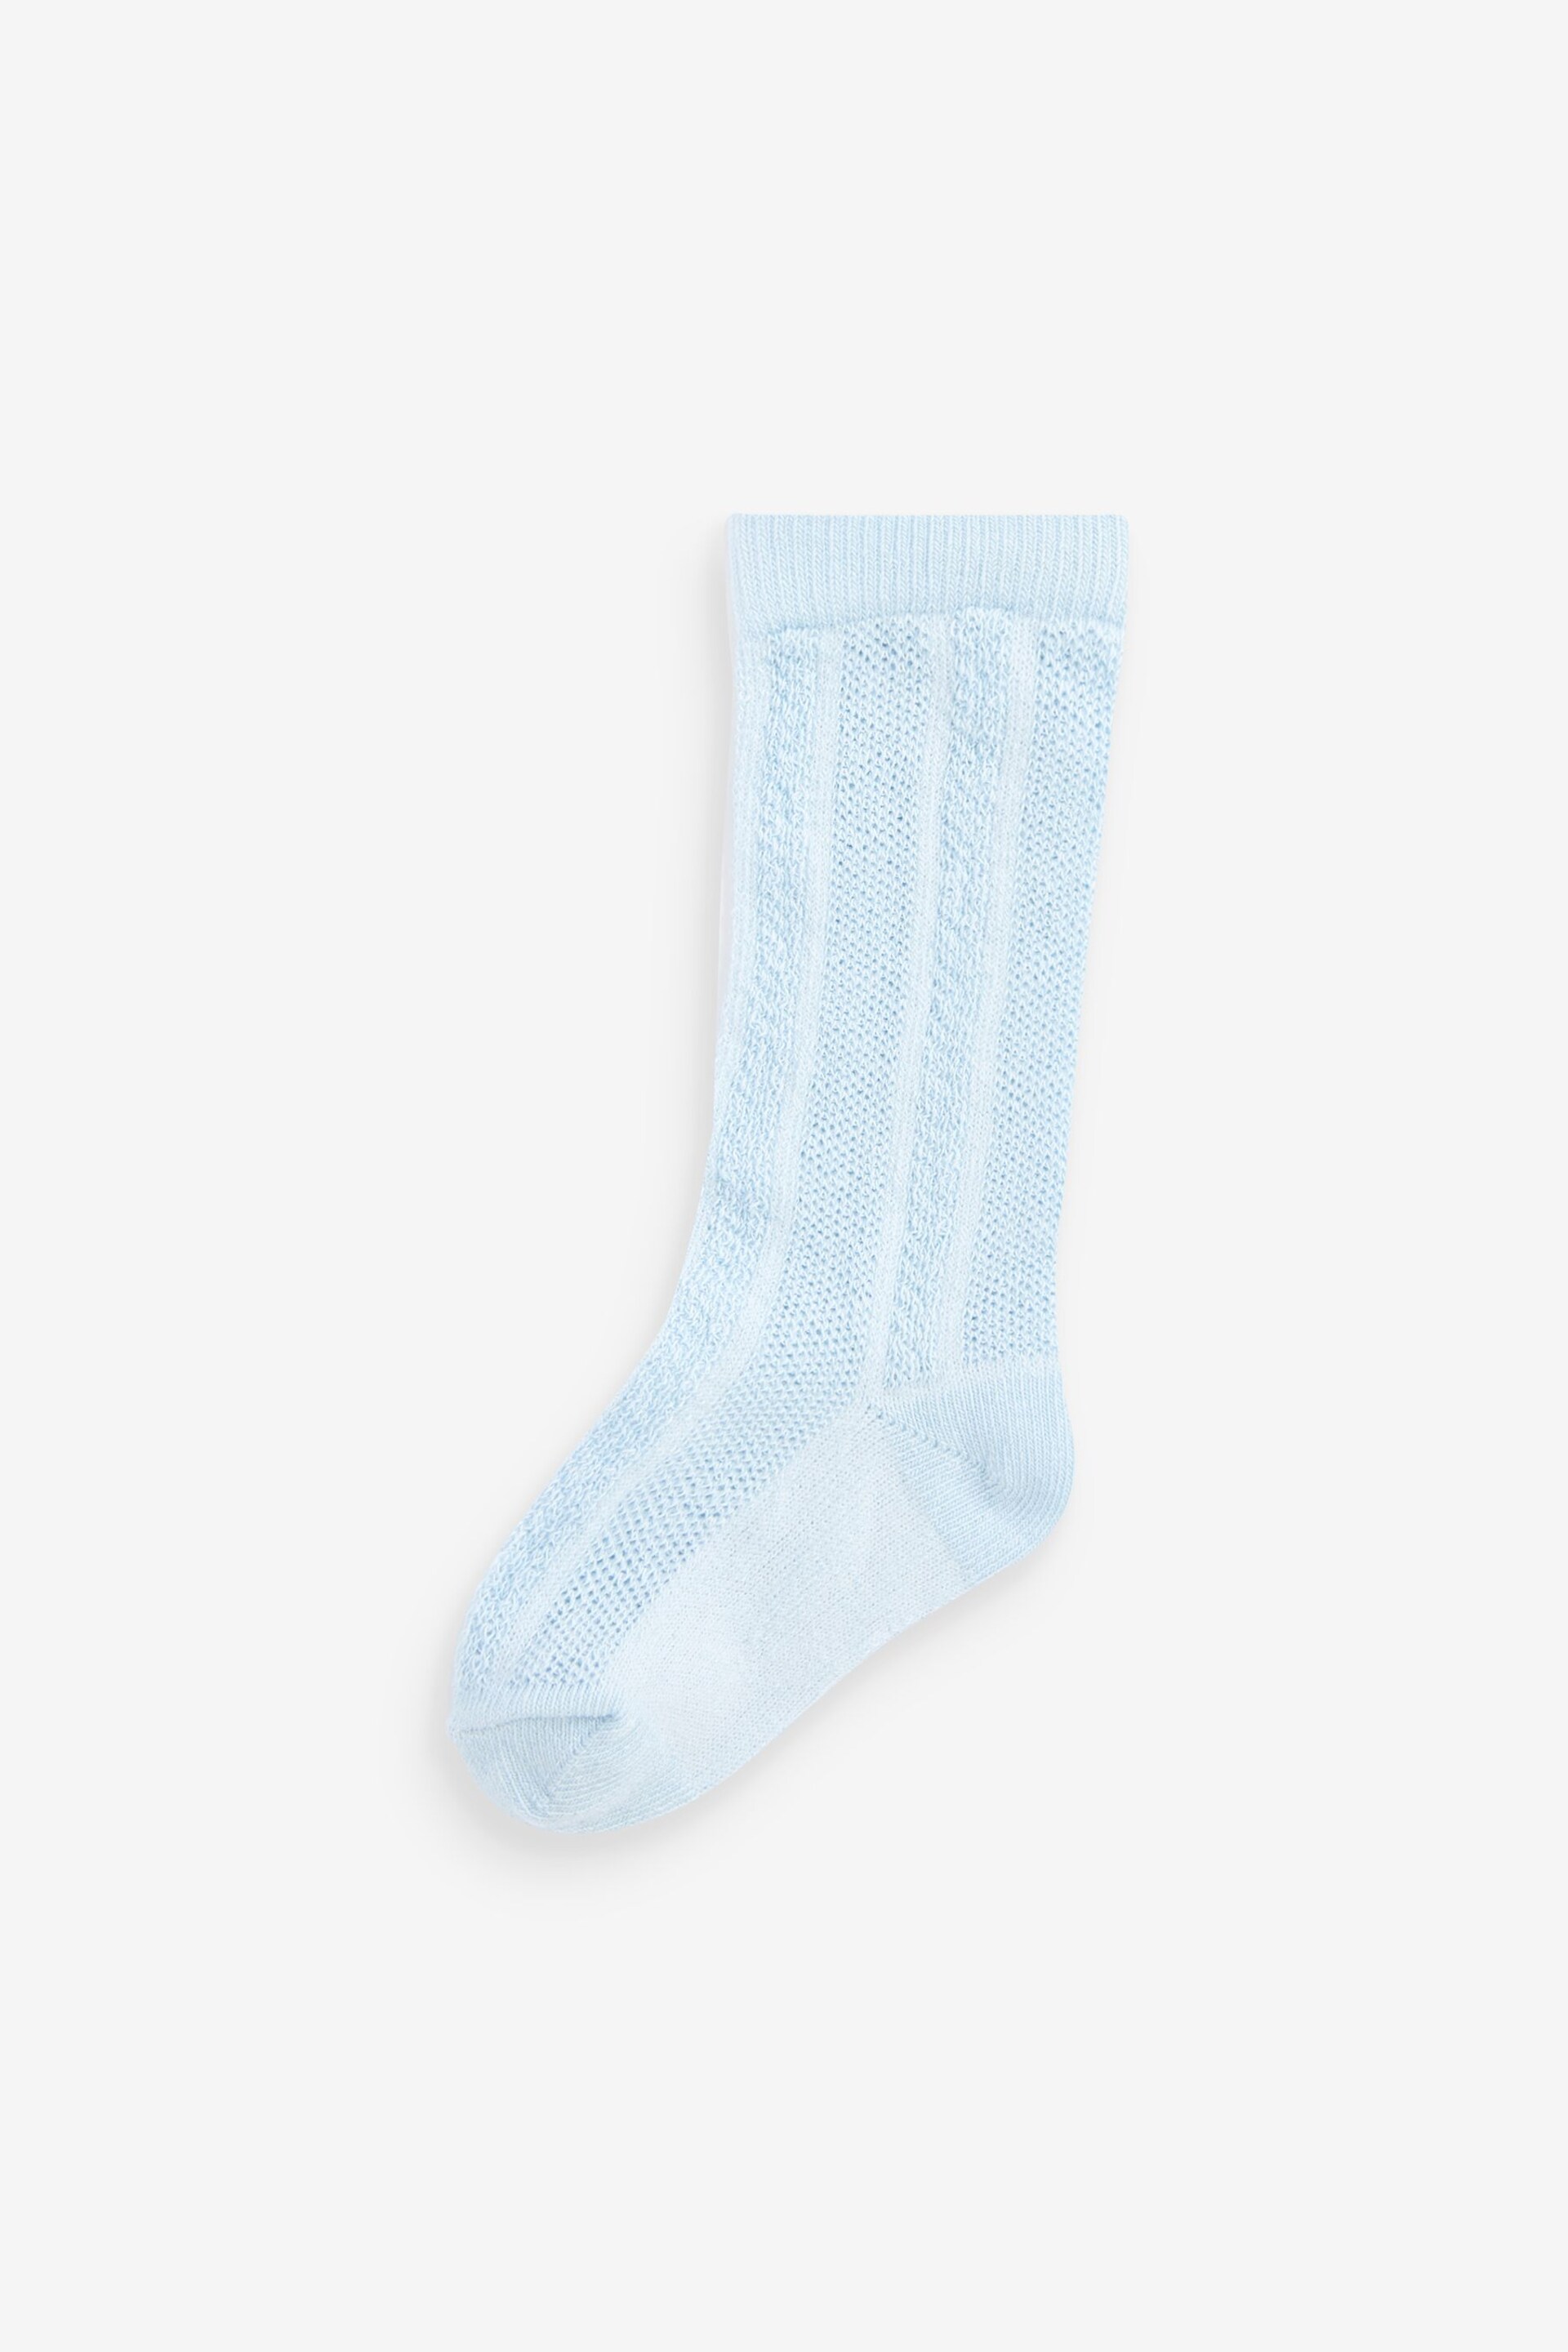 Blue Baby Knee Length Socks 3 Pack (0mths-2yrs) - Image 2 of 4